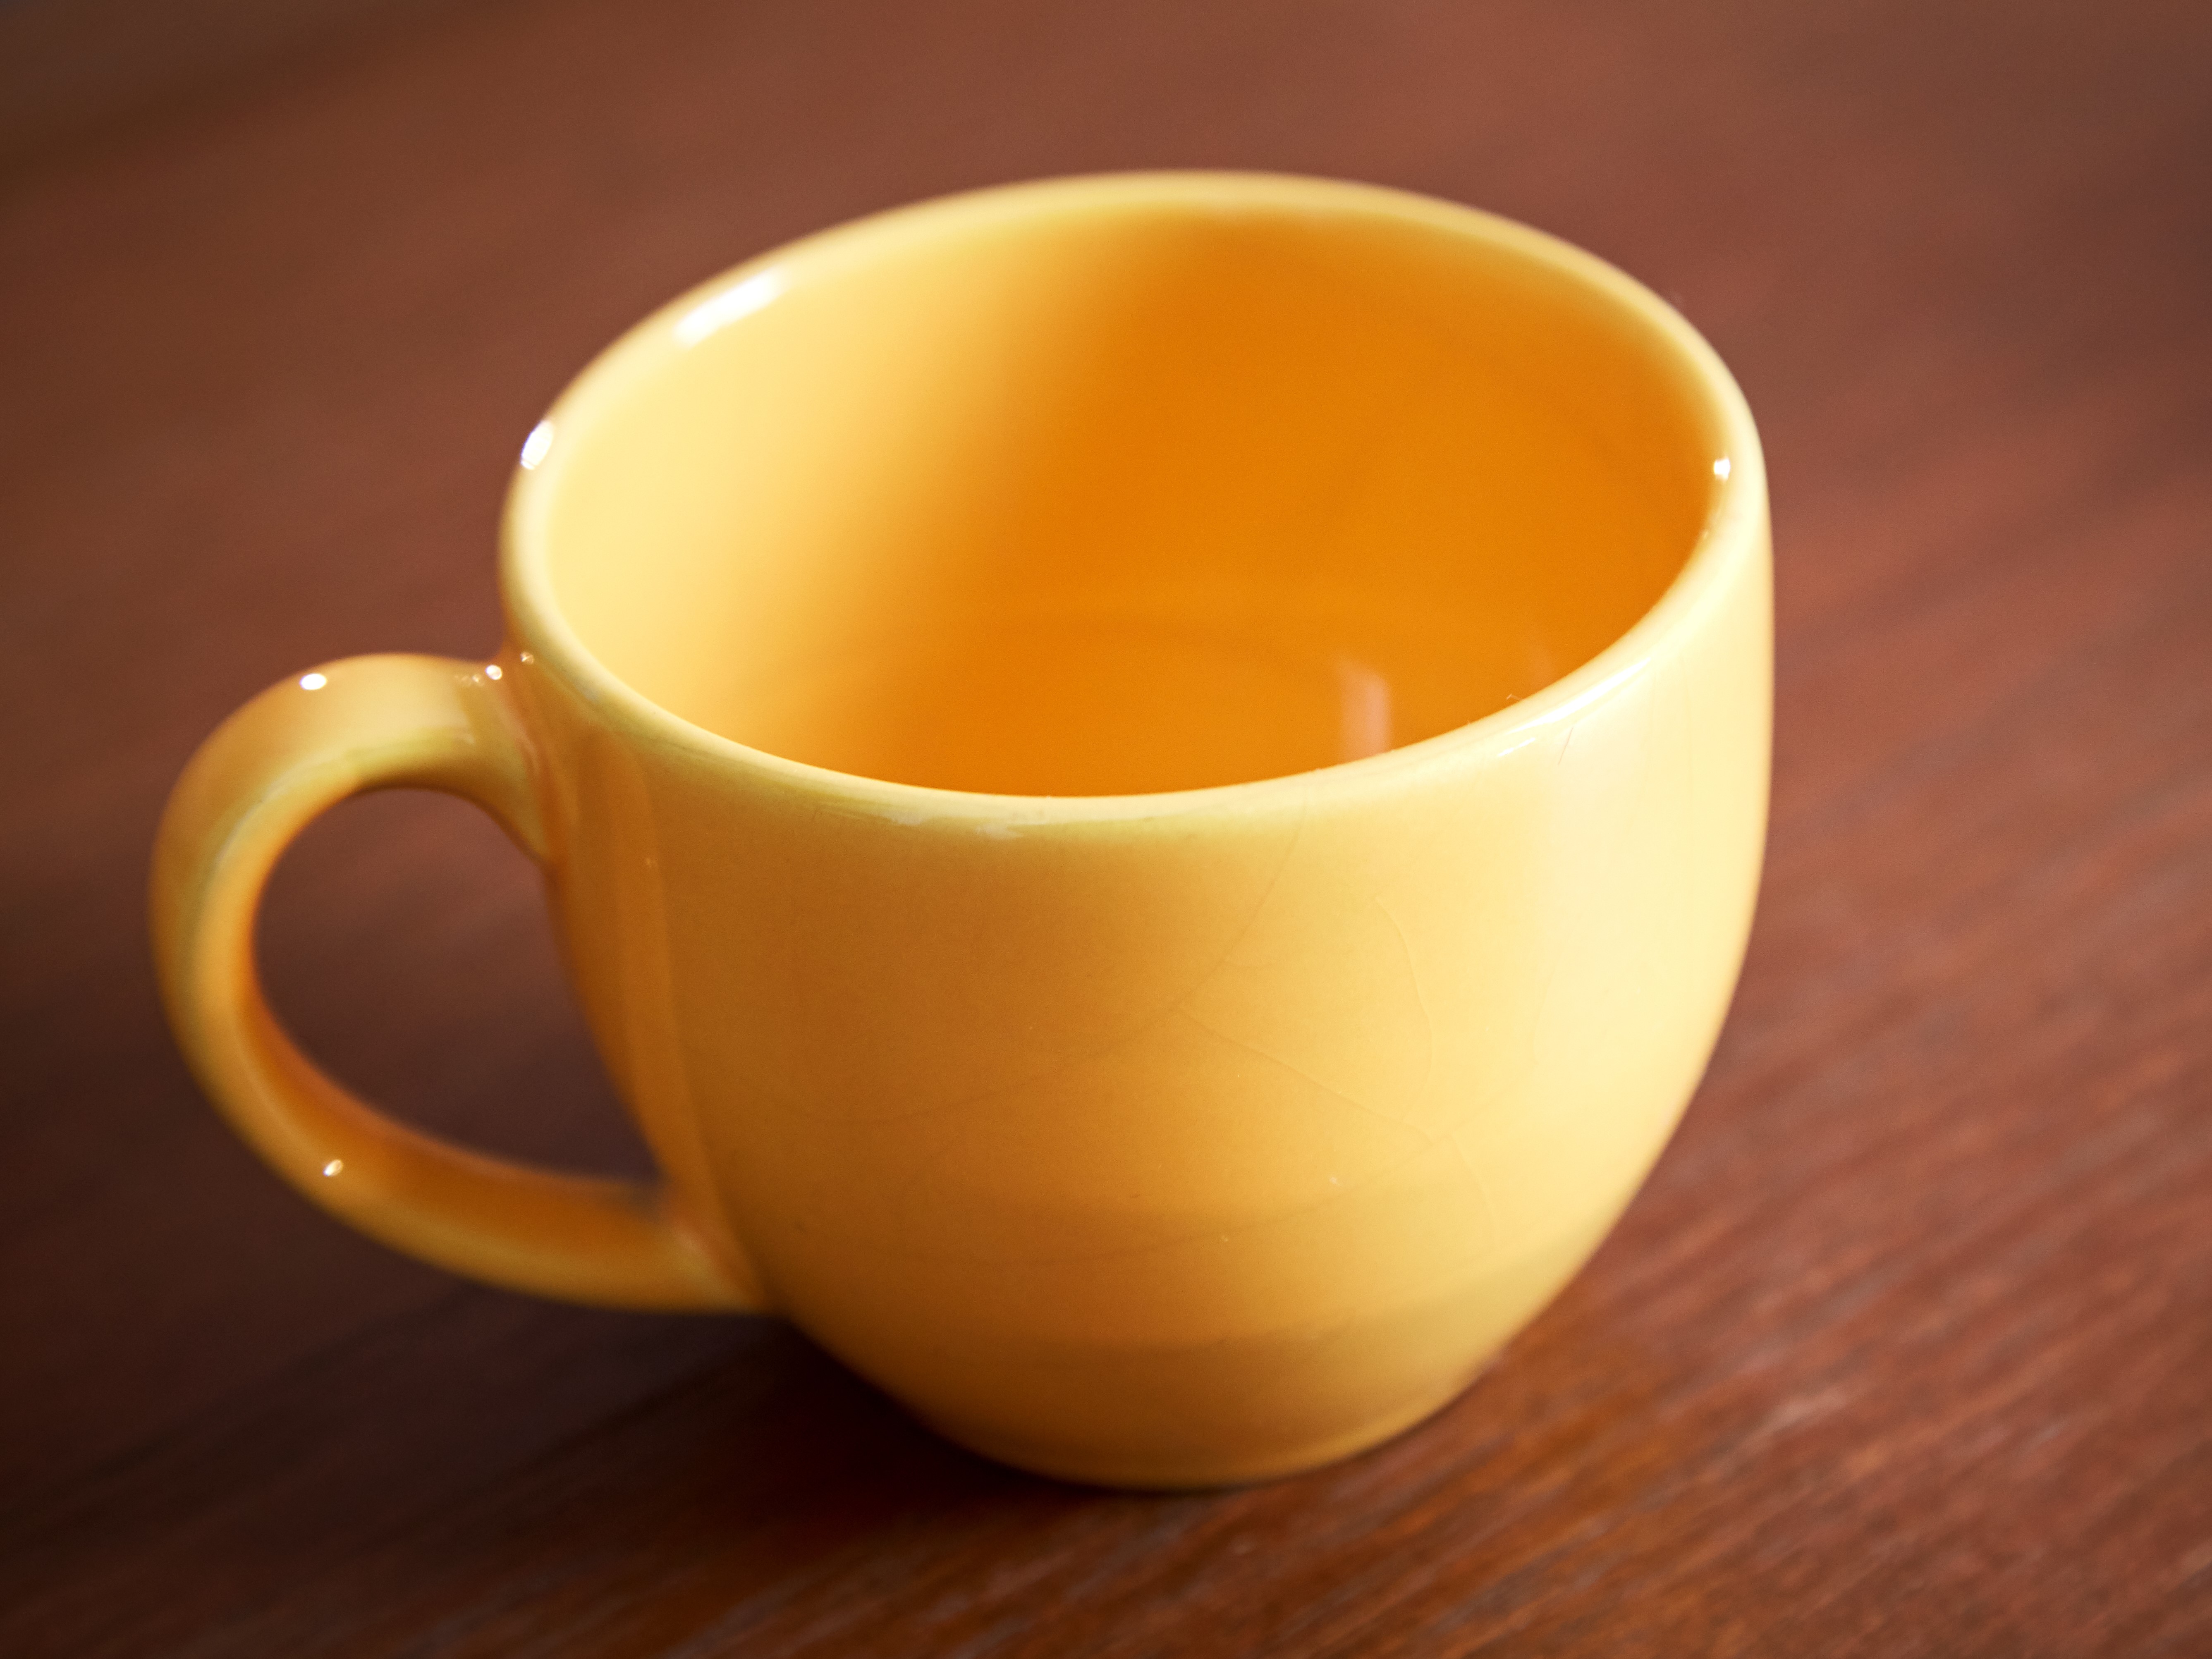 empty, ceramic yellow mug on wood table